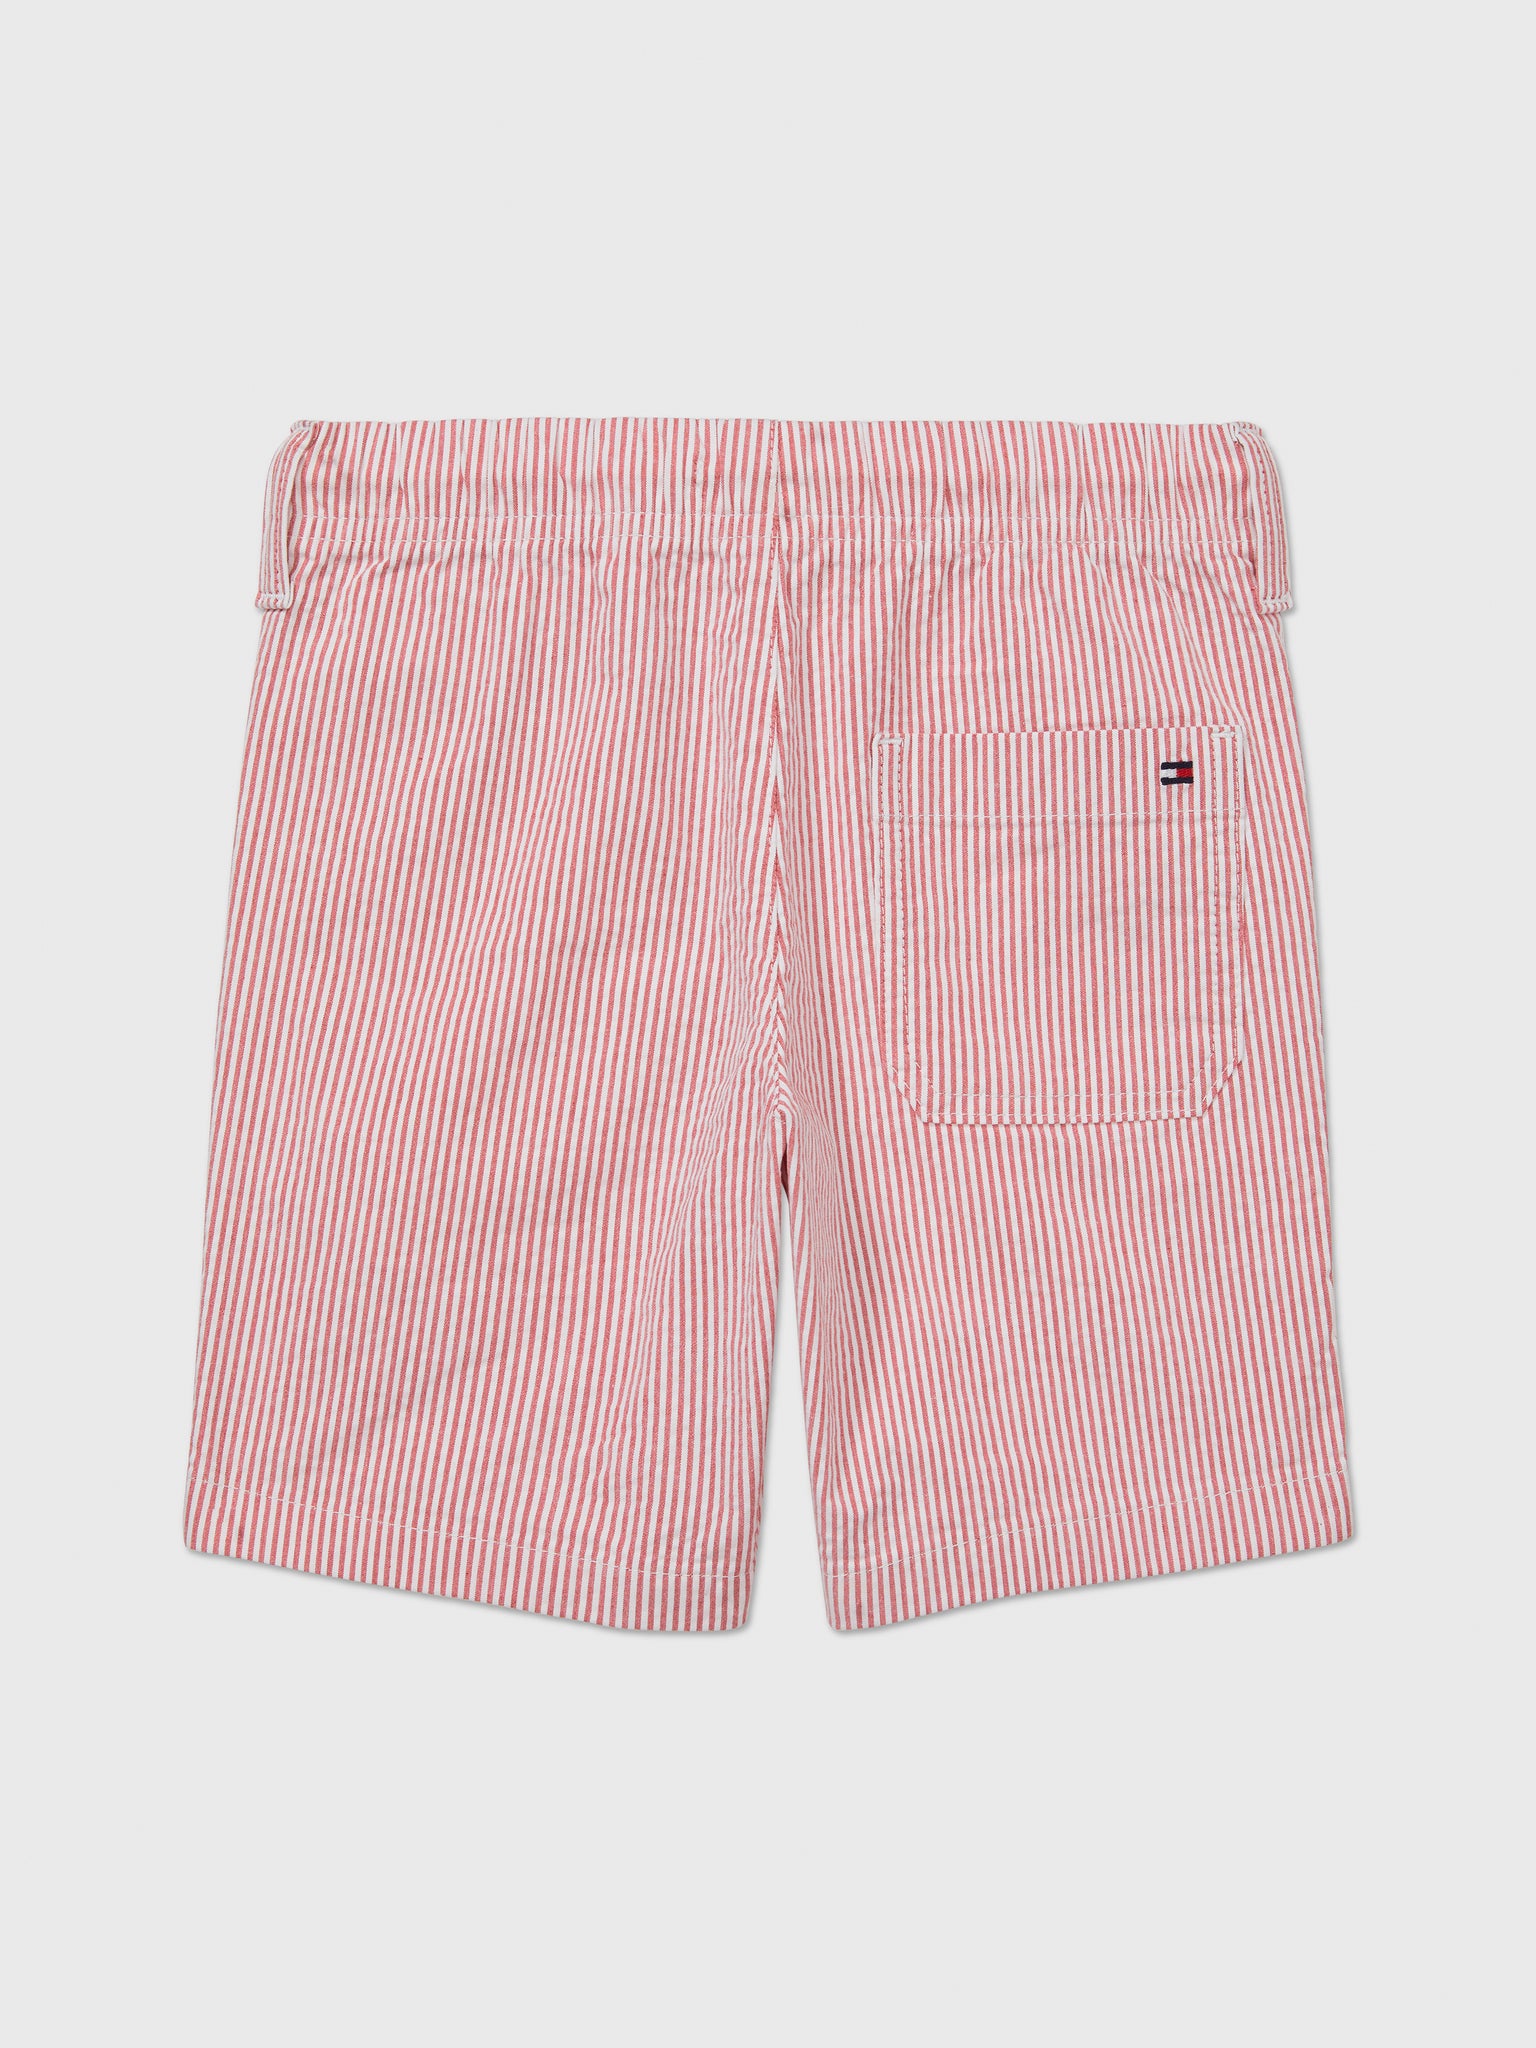 Pull On Shorts (Kids) - Blush Red